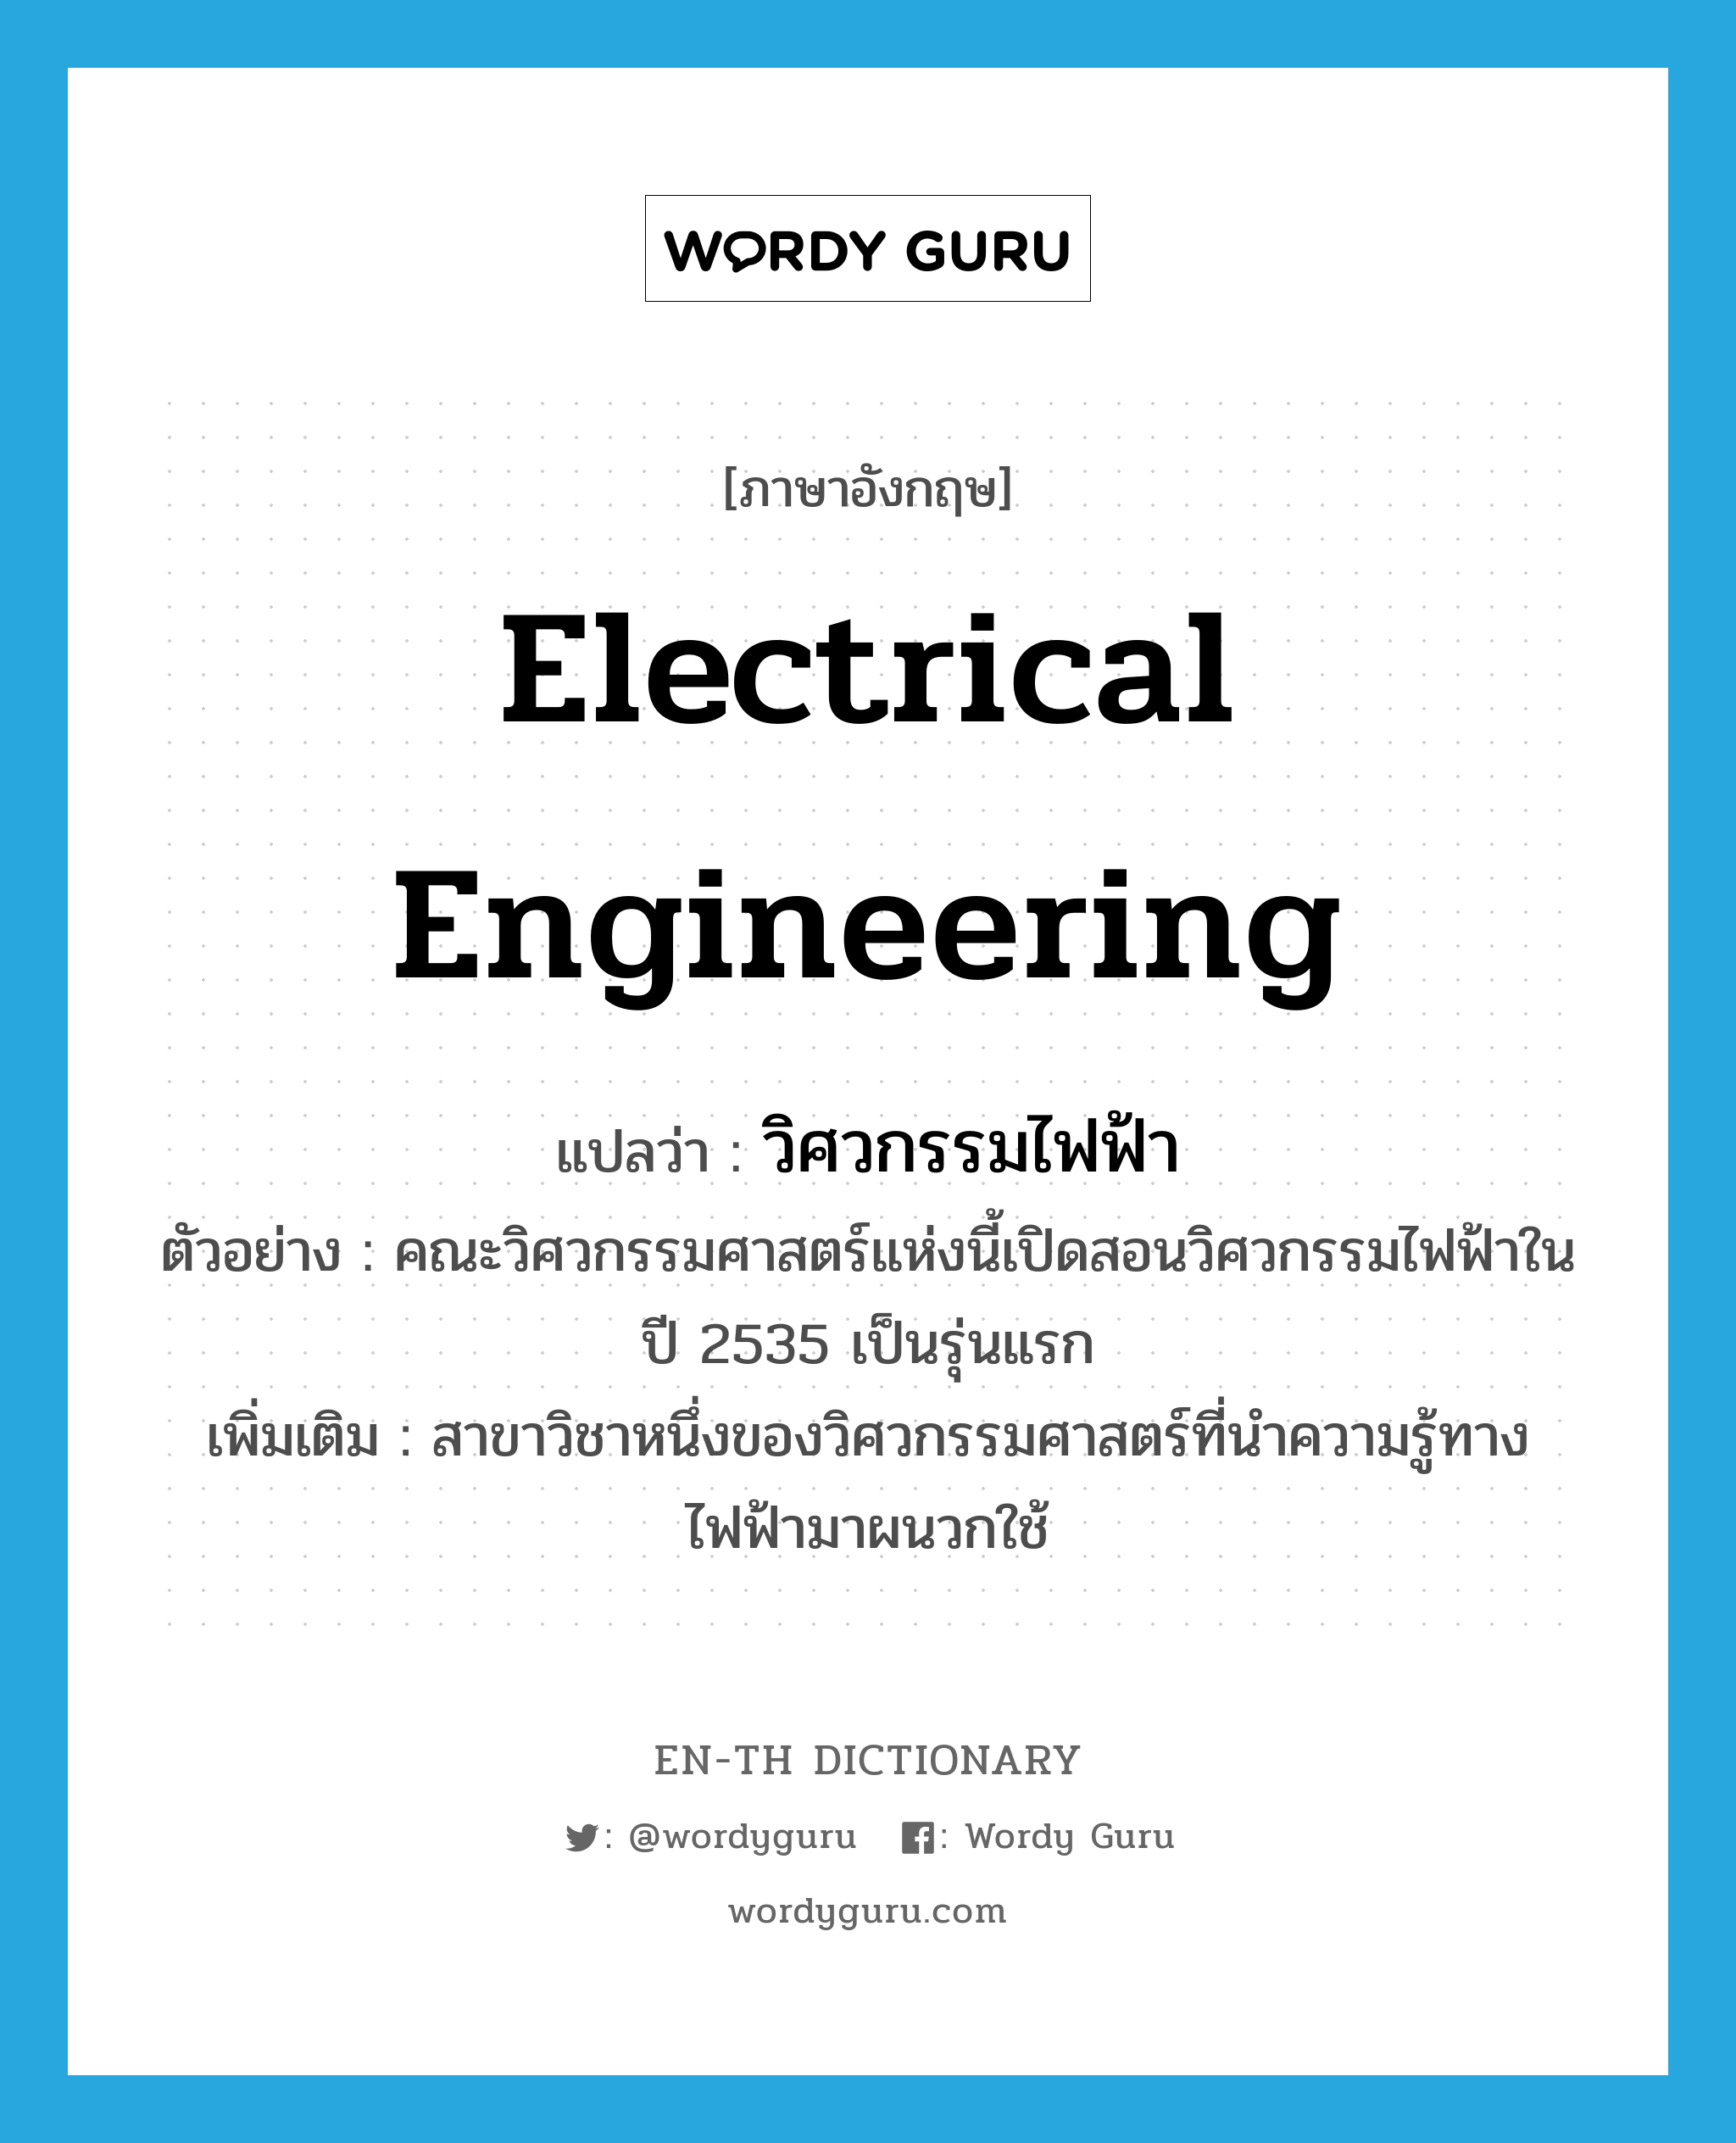 electrical engineering แปลว่า?, คำศัพท์ภาษาอังกฤษ electrical engineering แปลว่า วิศวกรรมไฟฟ้า ประเภท N ตัวอย่าง คณะวิศวกรรมศาสตร์แห่งนี้เปิดสอนวิศวกรรมไฟฟ้าในปี 2535 เป็นรุ่นแรก เพิ่มเติม สาขาวิชาหนึ่งของวิศวกรรมศาสตร์ที่นำความรู้ทางไฟฟ้ามาผนวกใช้ หมวด N